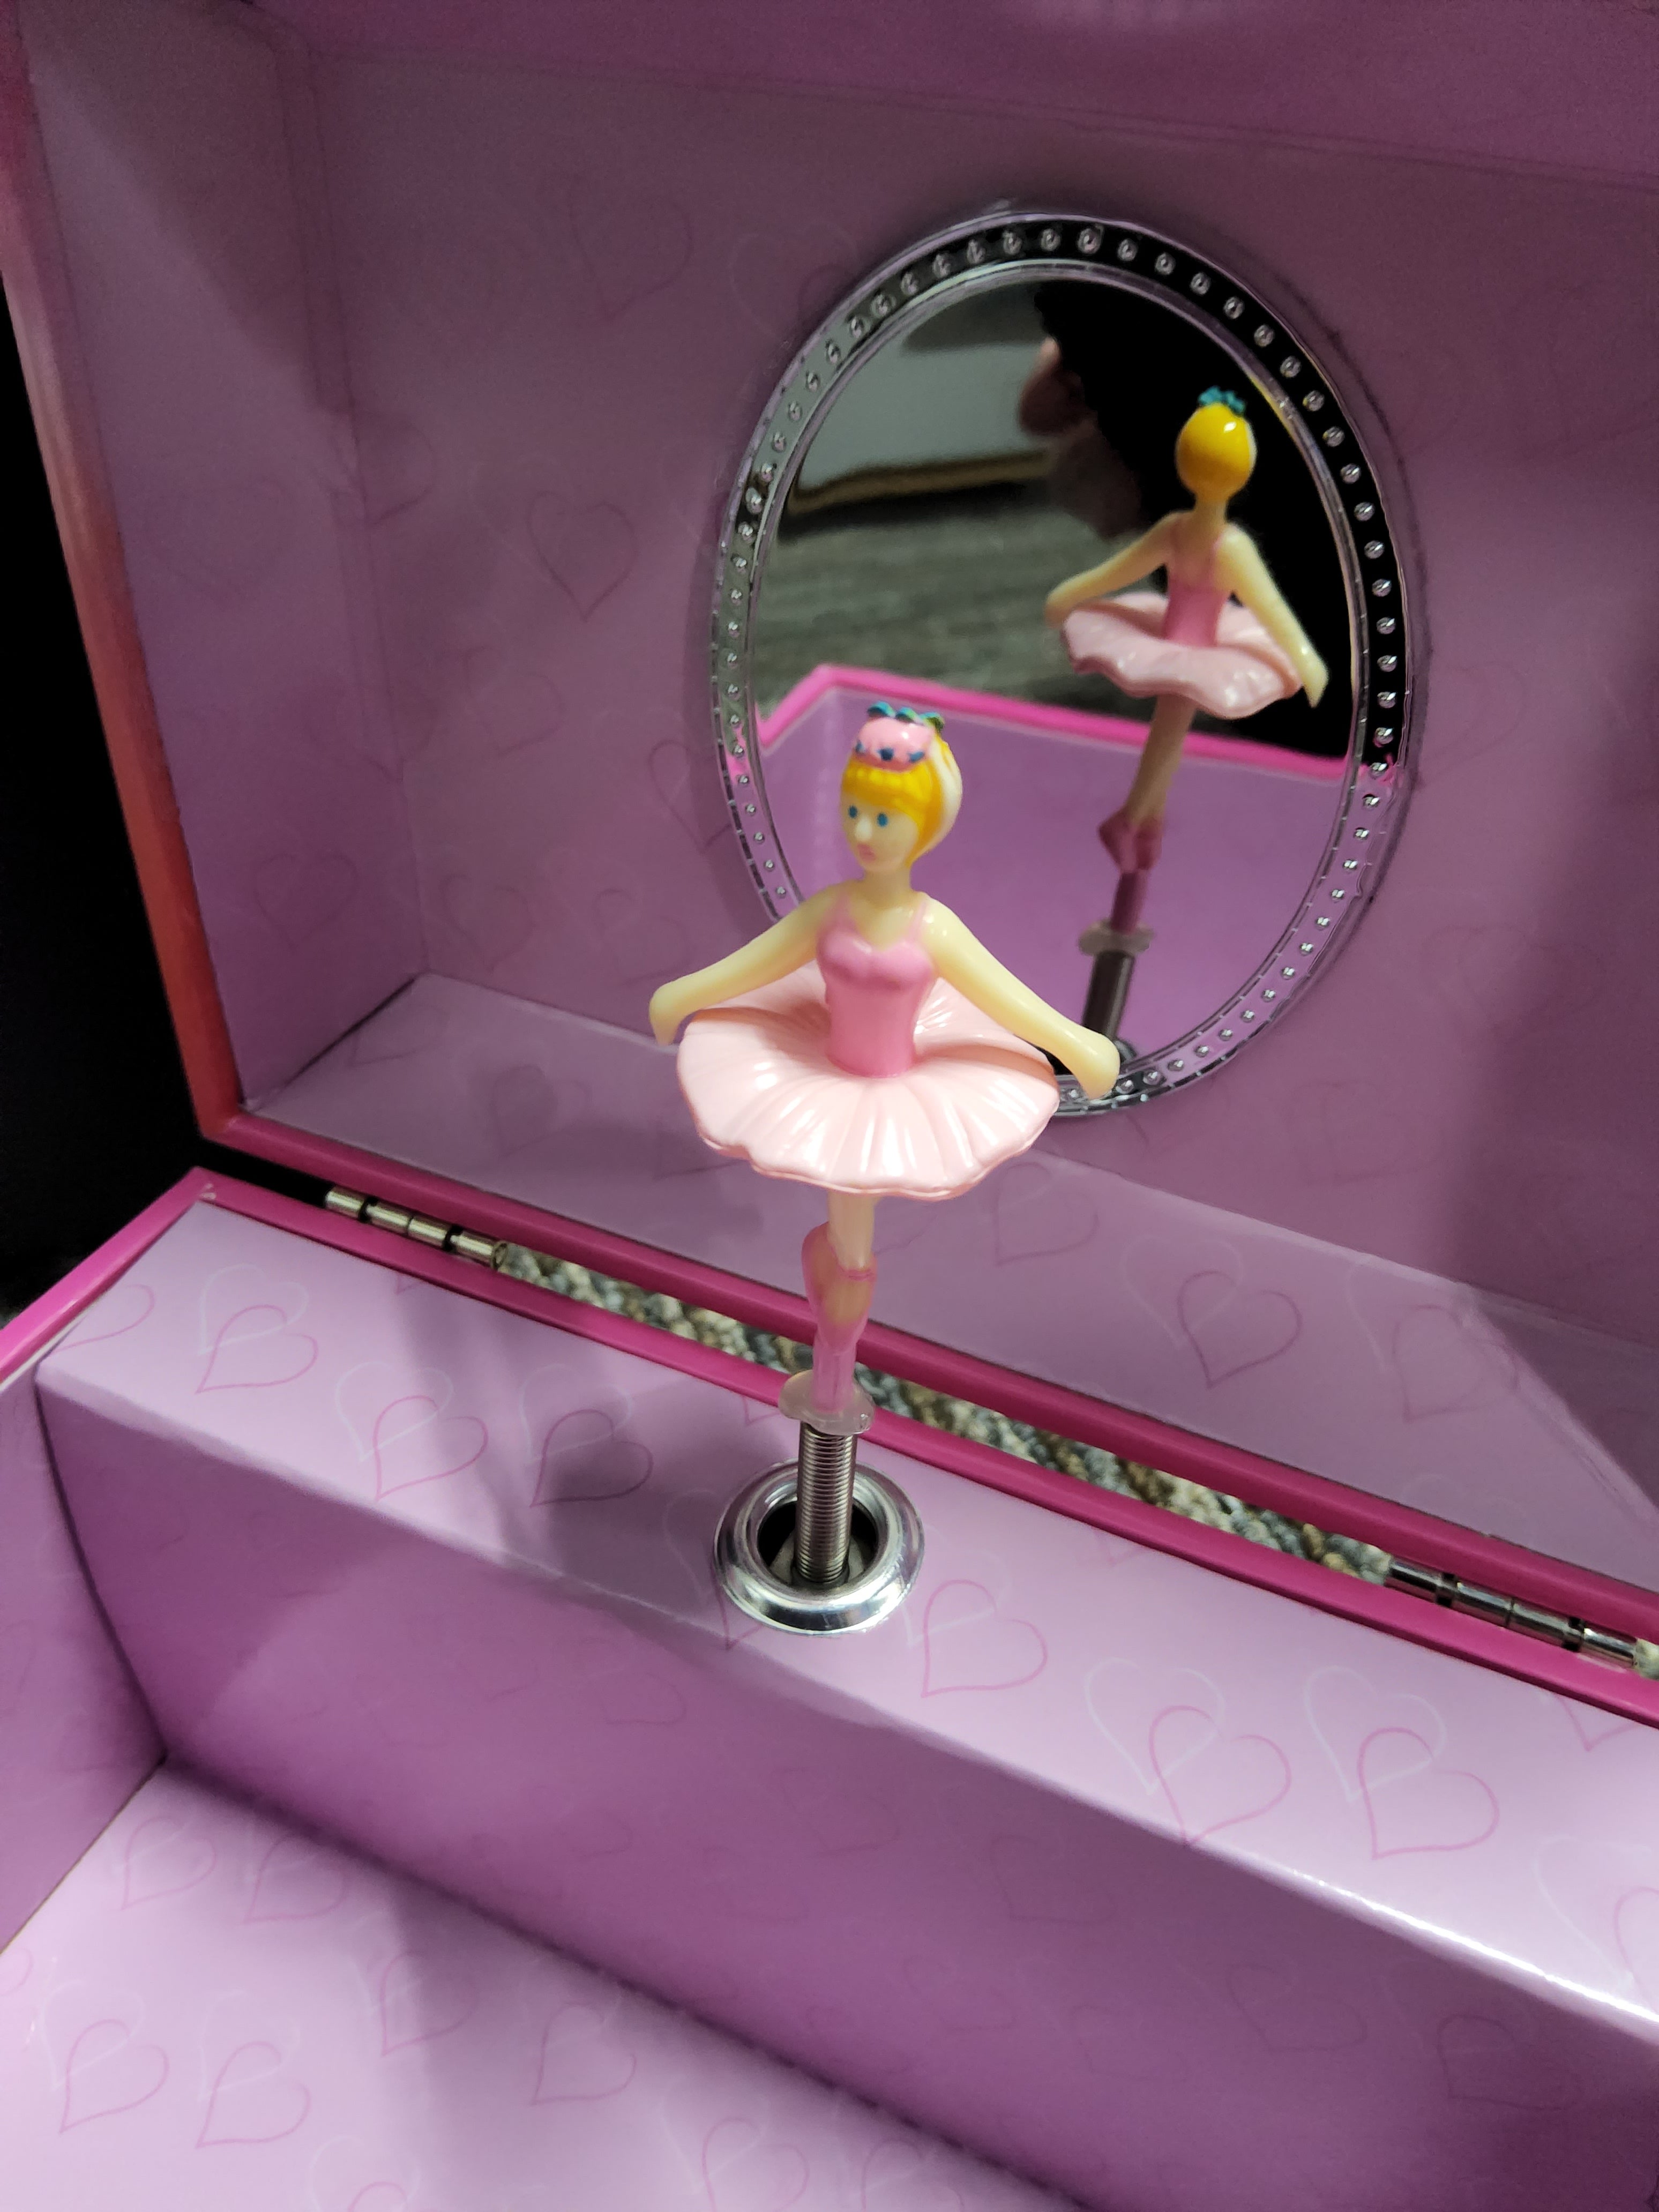 Child's Jewelry Box - Barbie Mermaid Design